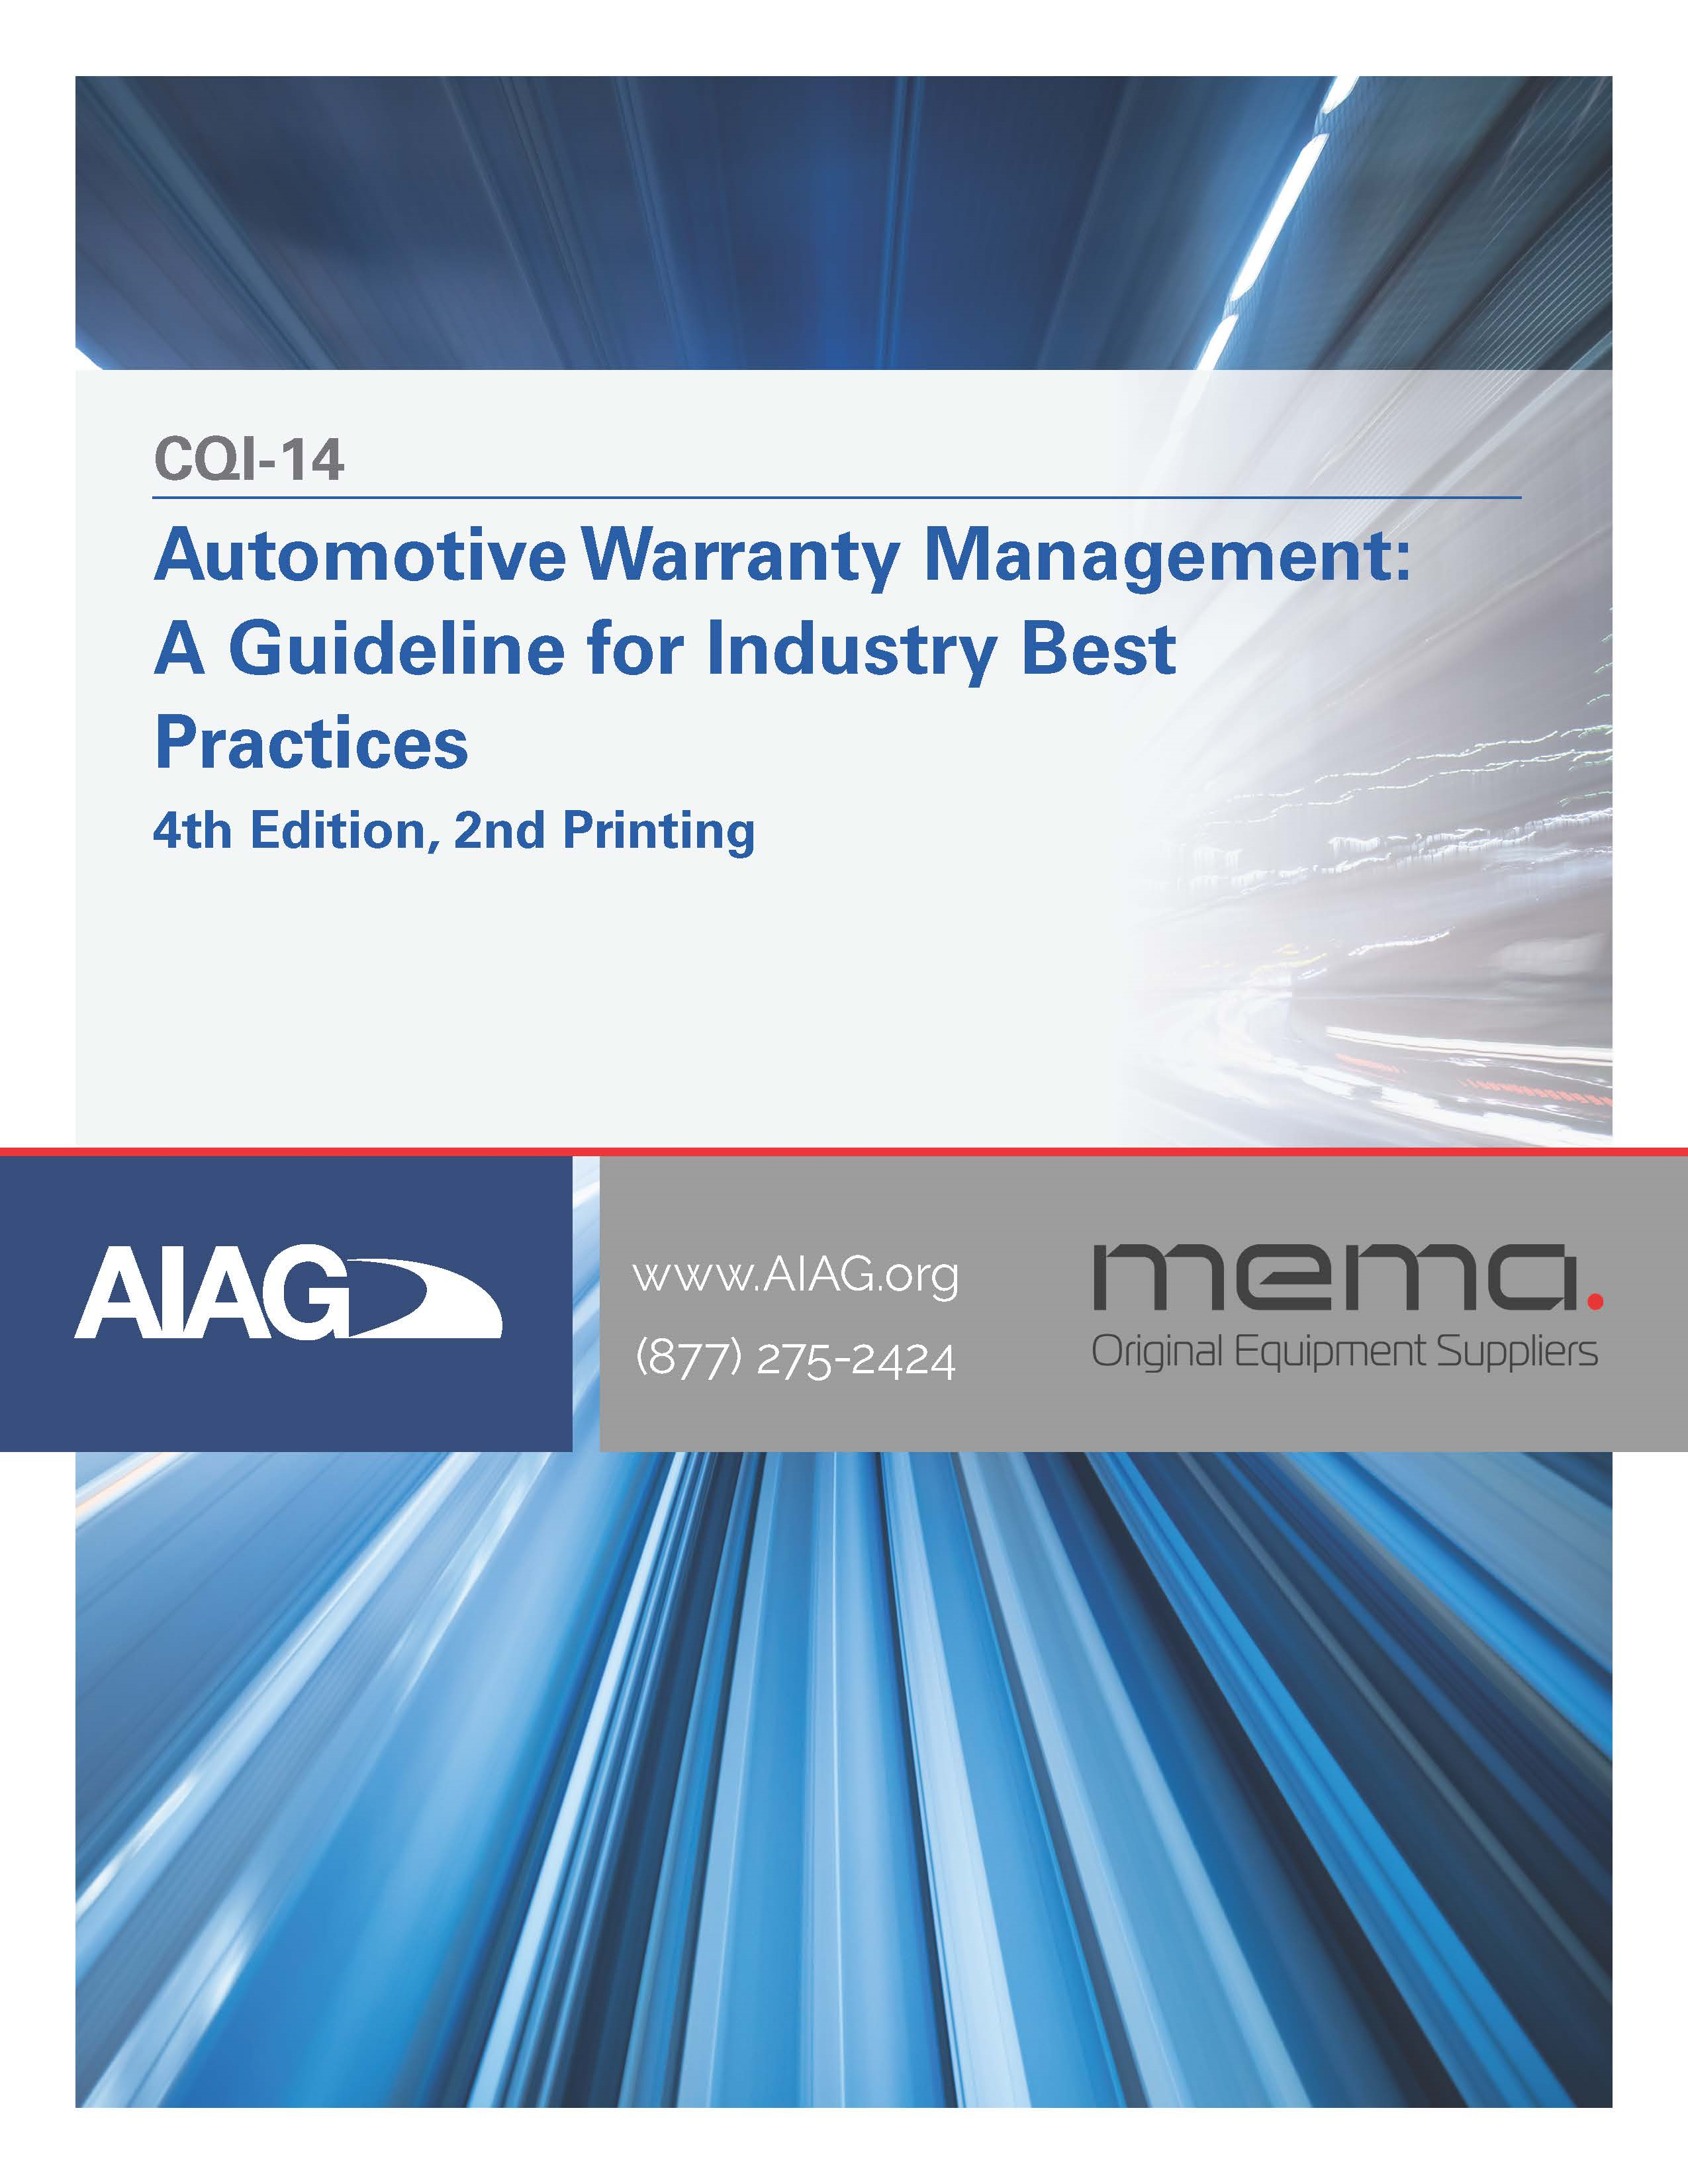 AIAG Automotive Warranty Management img